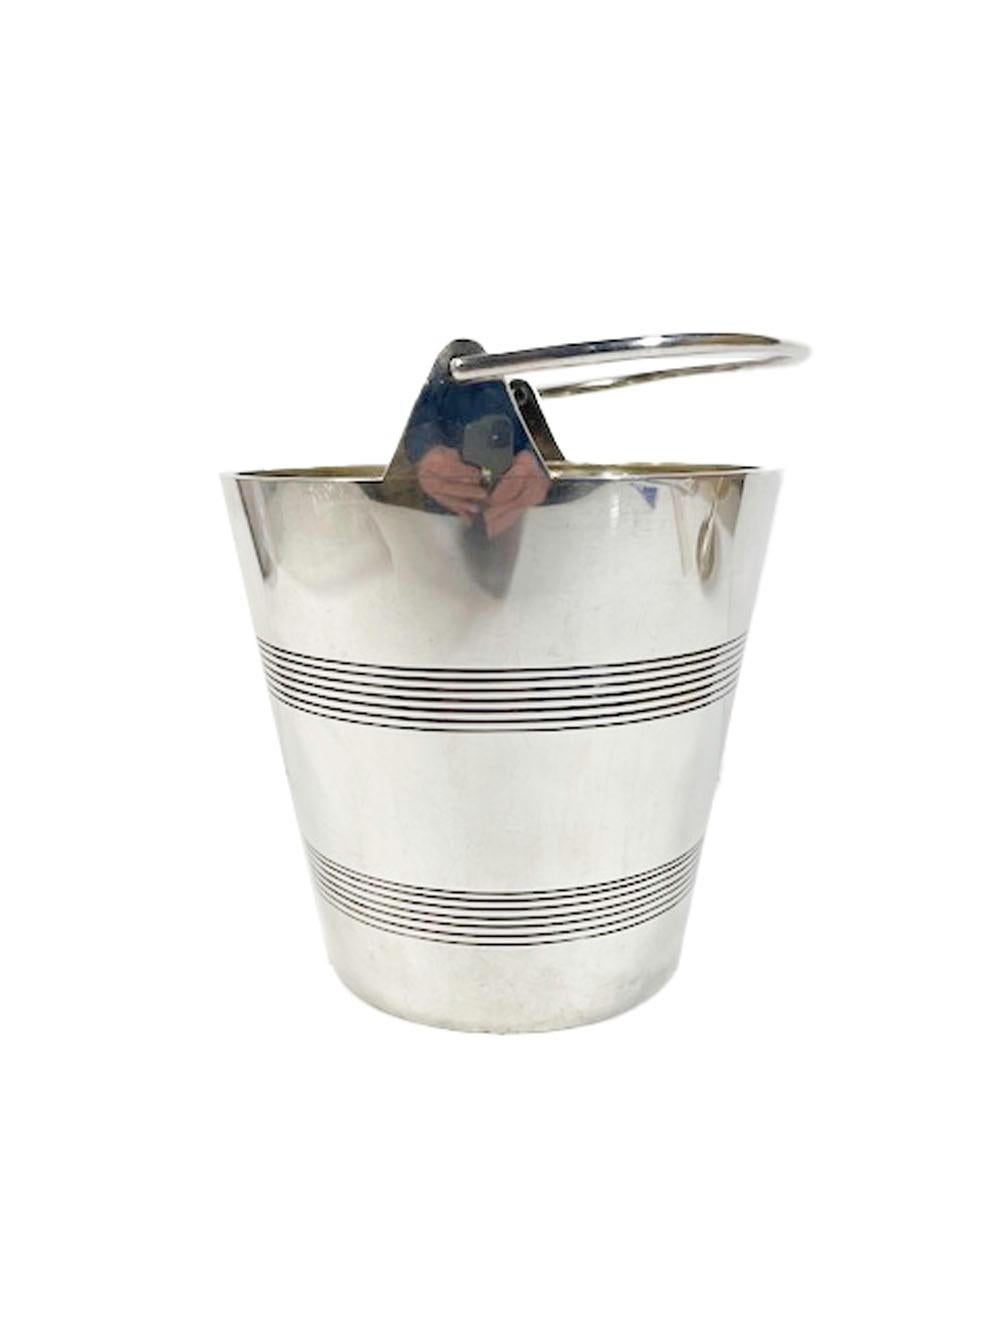 20th Century Art Deco Silver Plate Ice Bucket by Elkington & Co., Birmingham, England